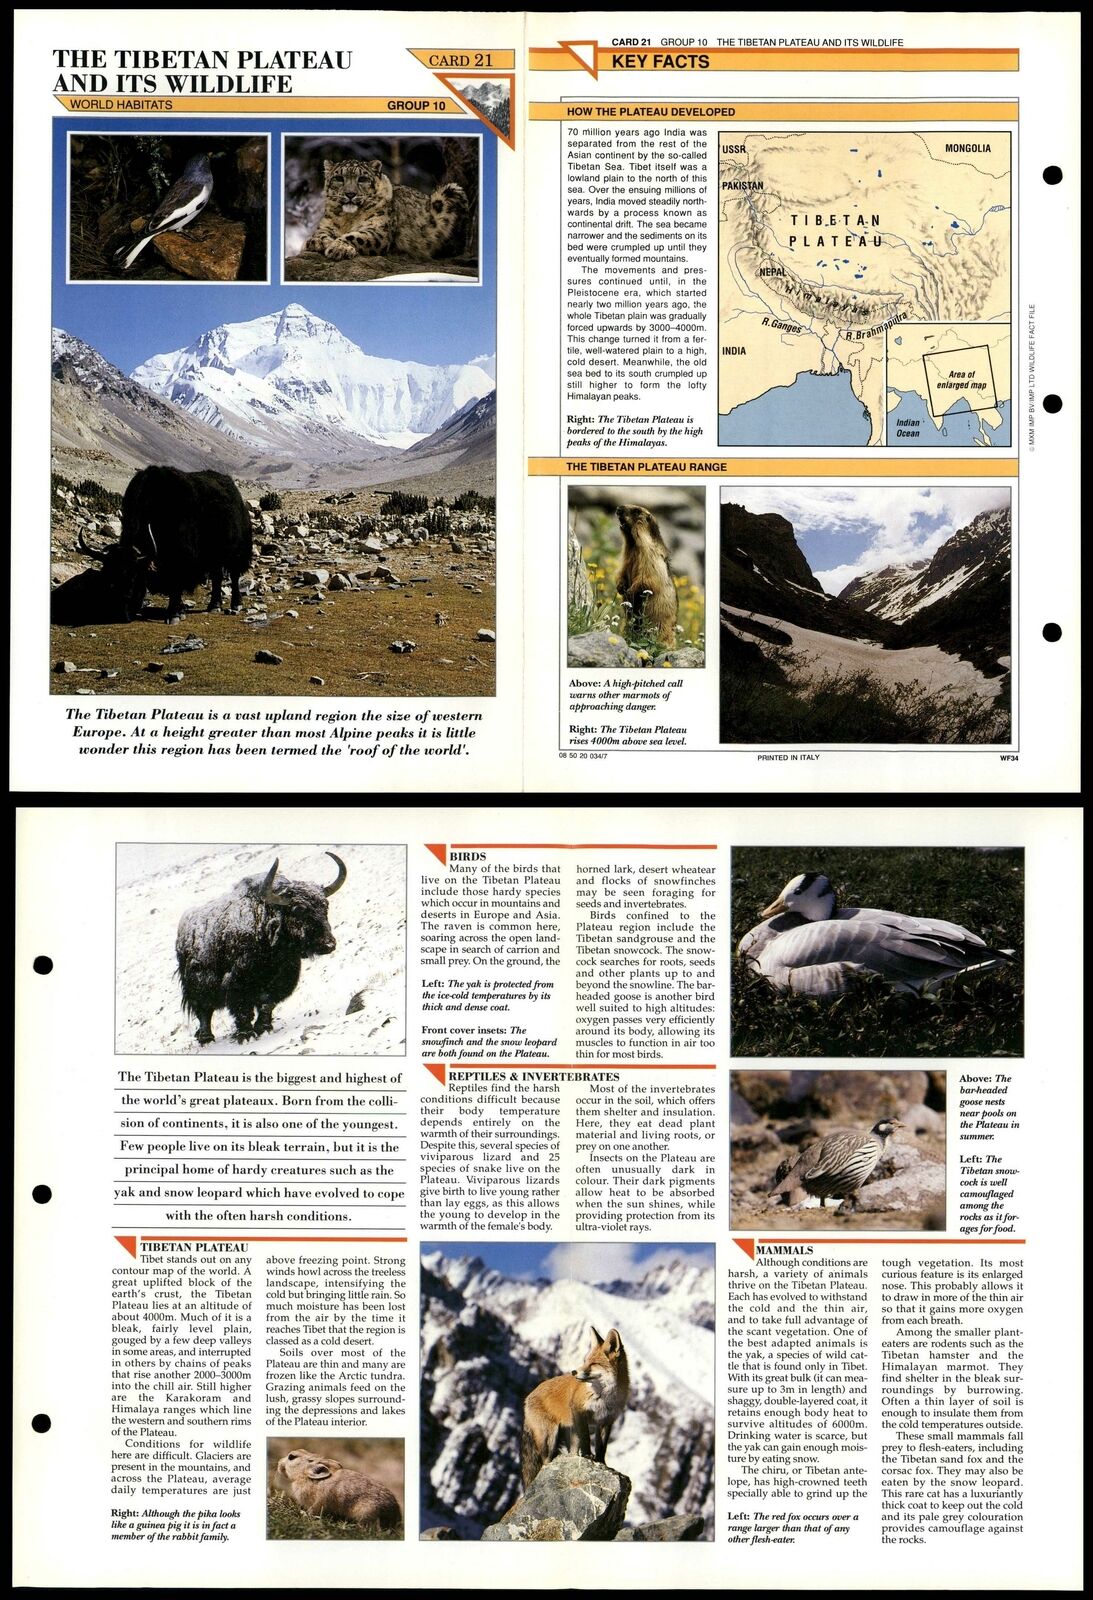 The Tibetan Plateau #21 World Habitats Wildlife Fact File Fold-Out Card